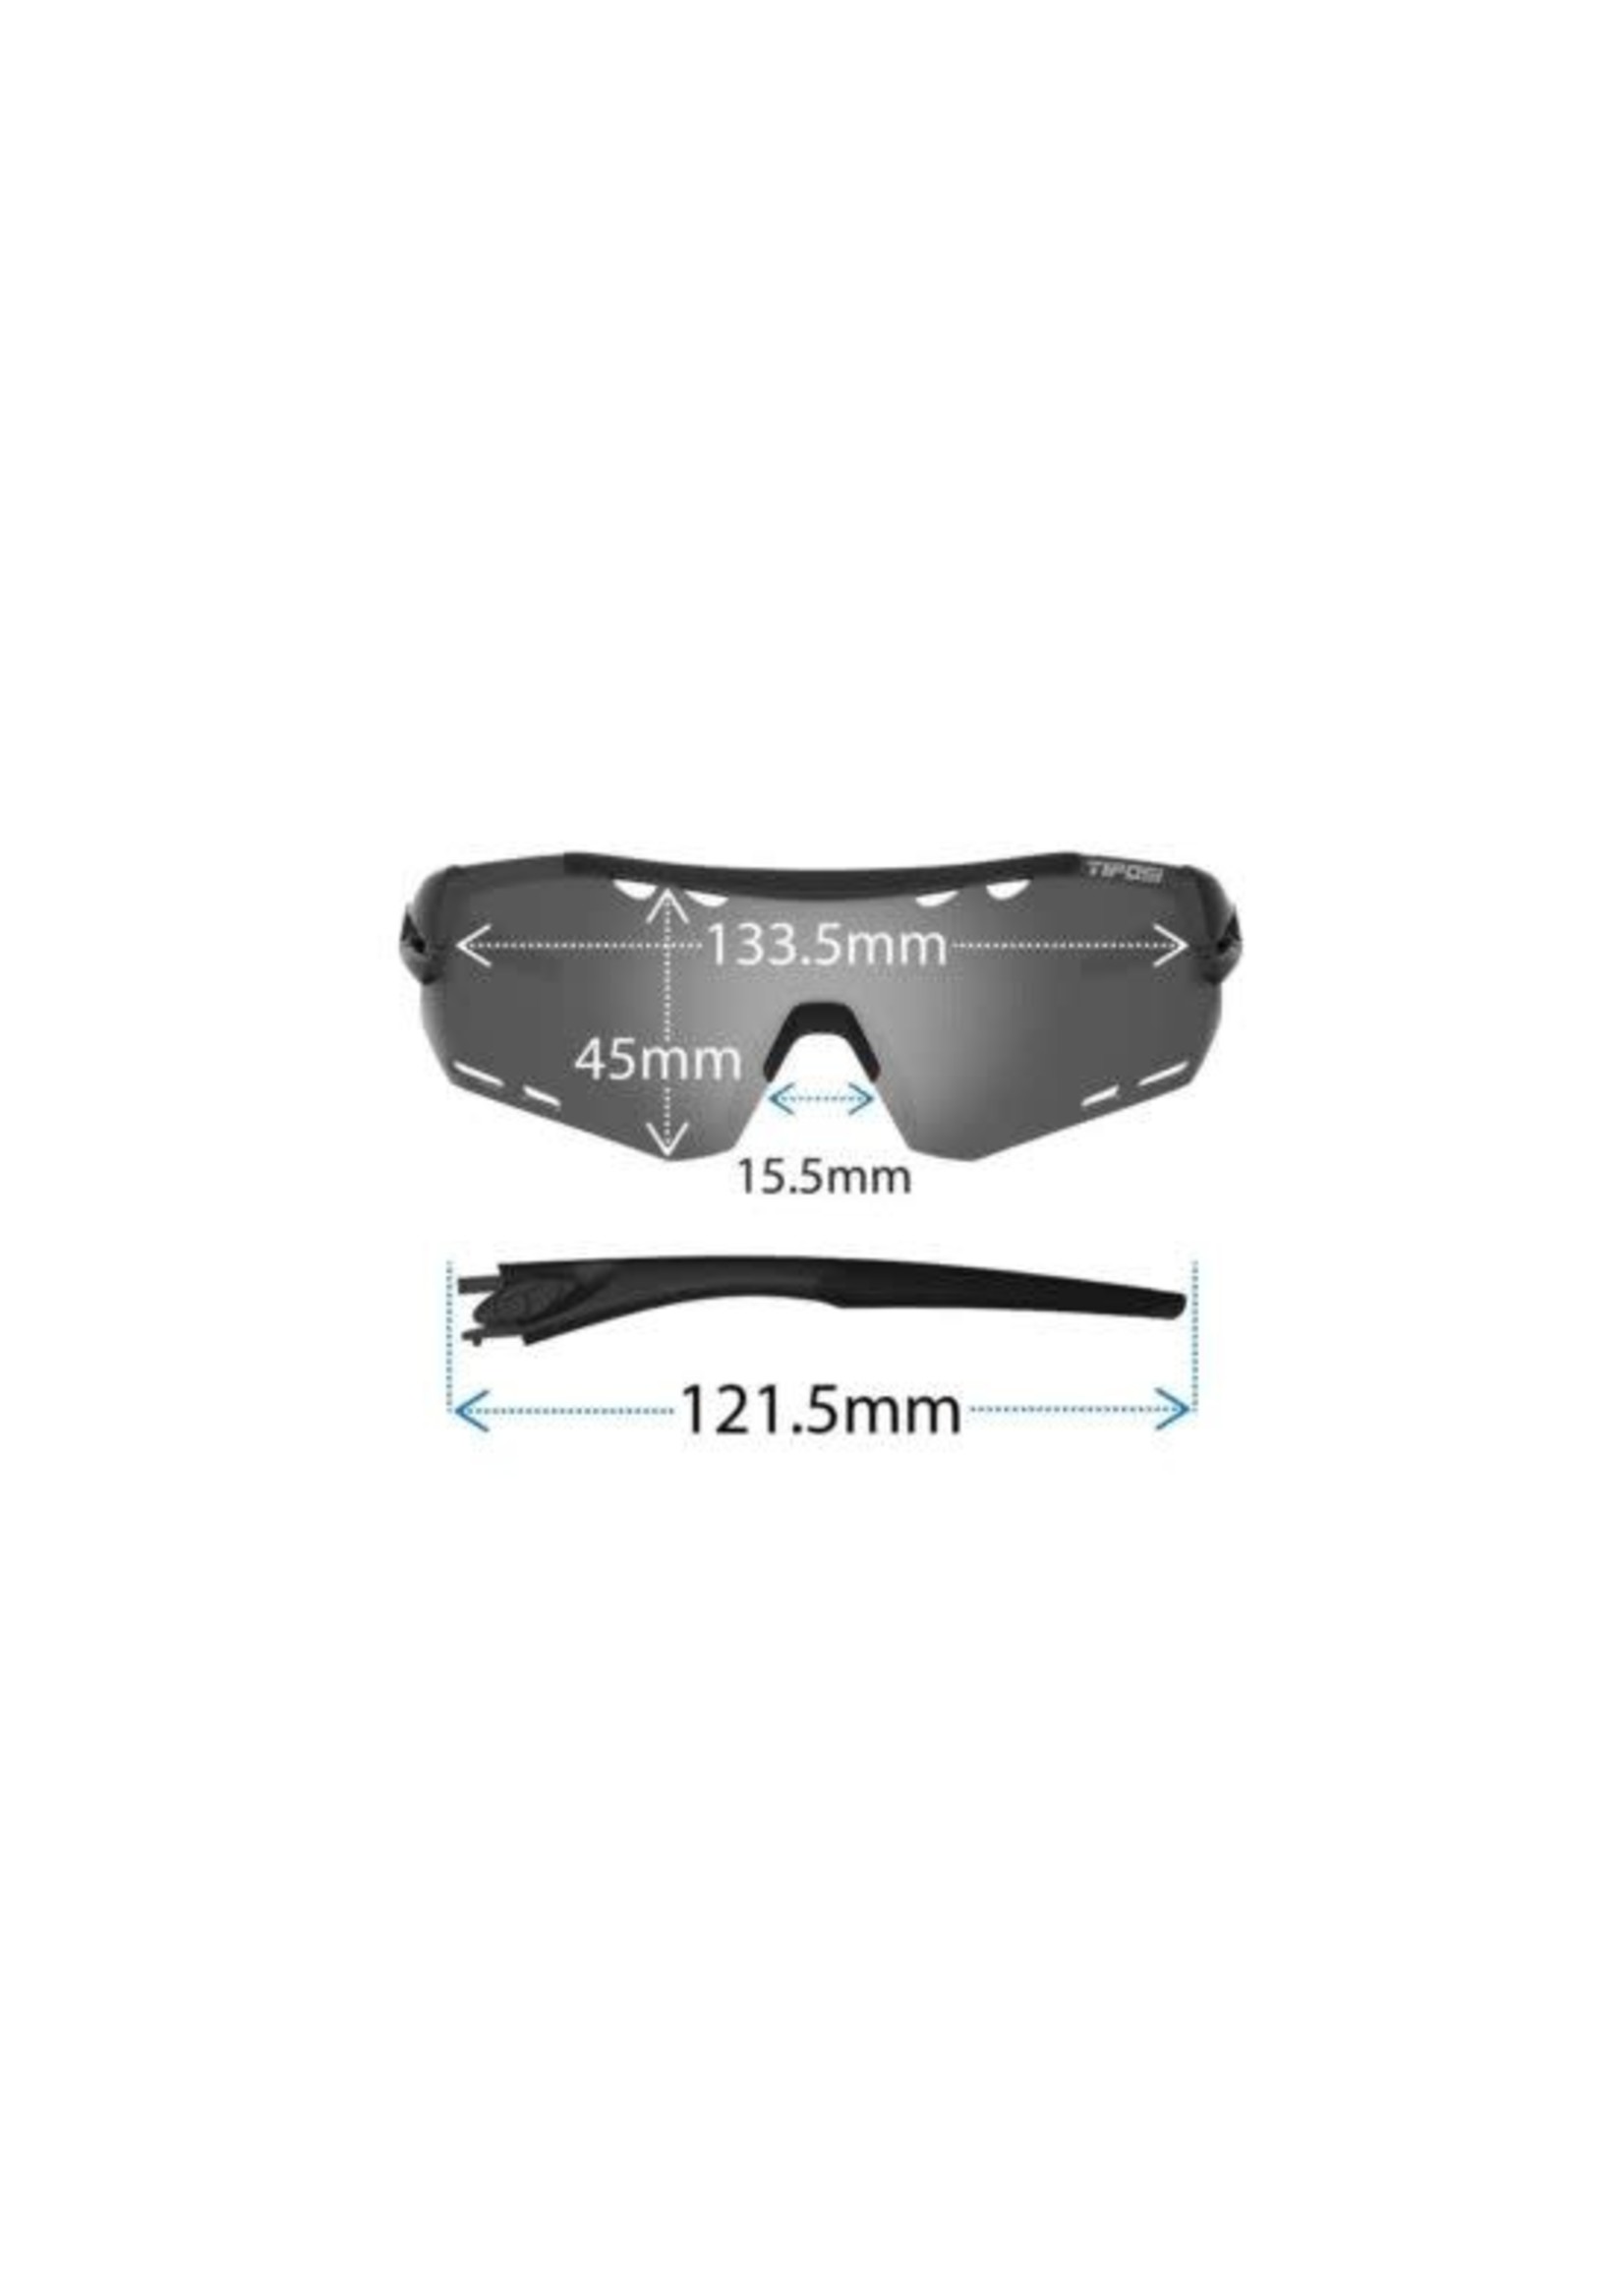 Tifosi Optics Alliant, Gunmetal Fototec Sunglasses